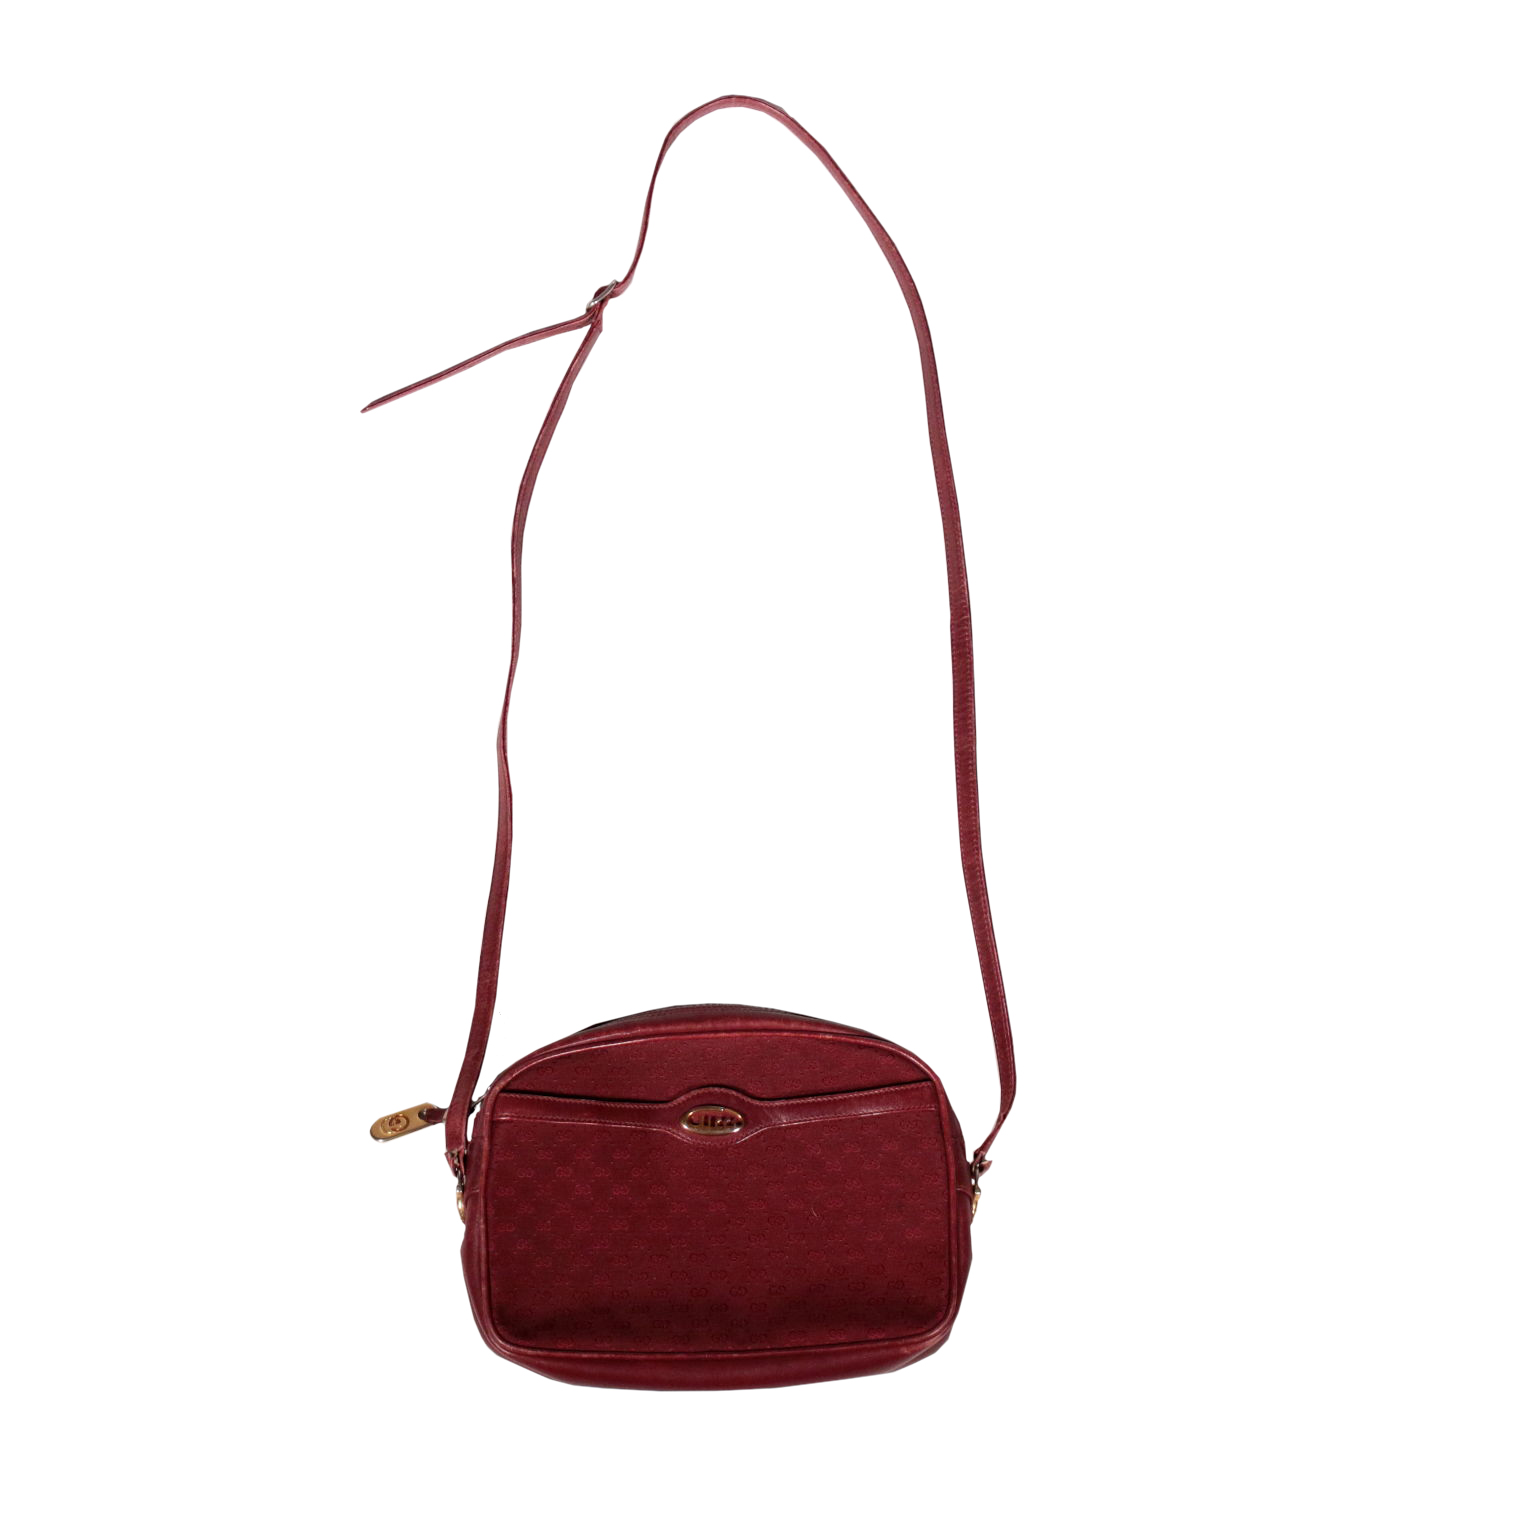 Handbags & Shoulder Bags, Messenger Bags Small Purse Ladies Handbags, Women  Crossbody Bag Vintage Leather Shoulder Bags (Burgundy),Bags : Amazon.co.uk:  Fashion